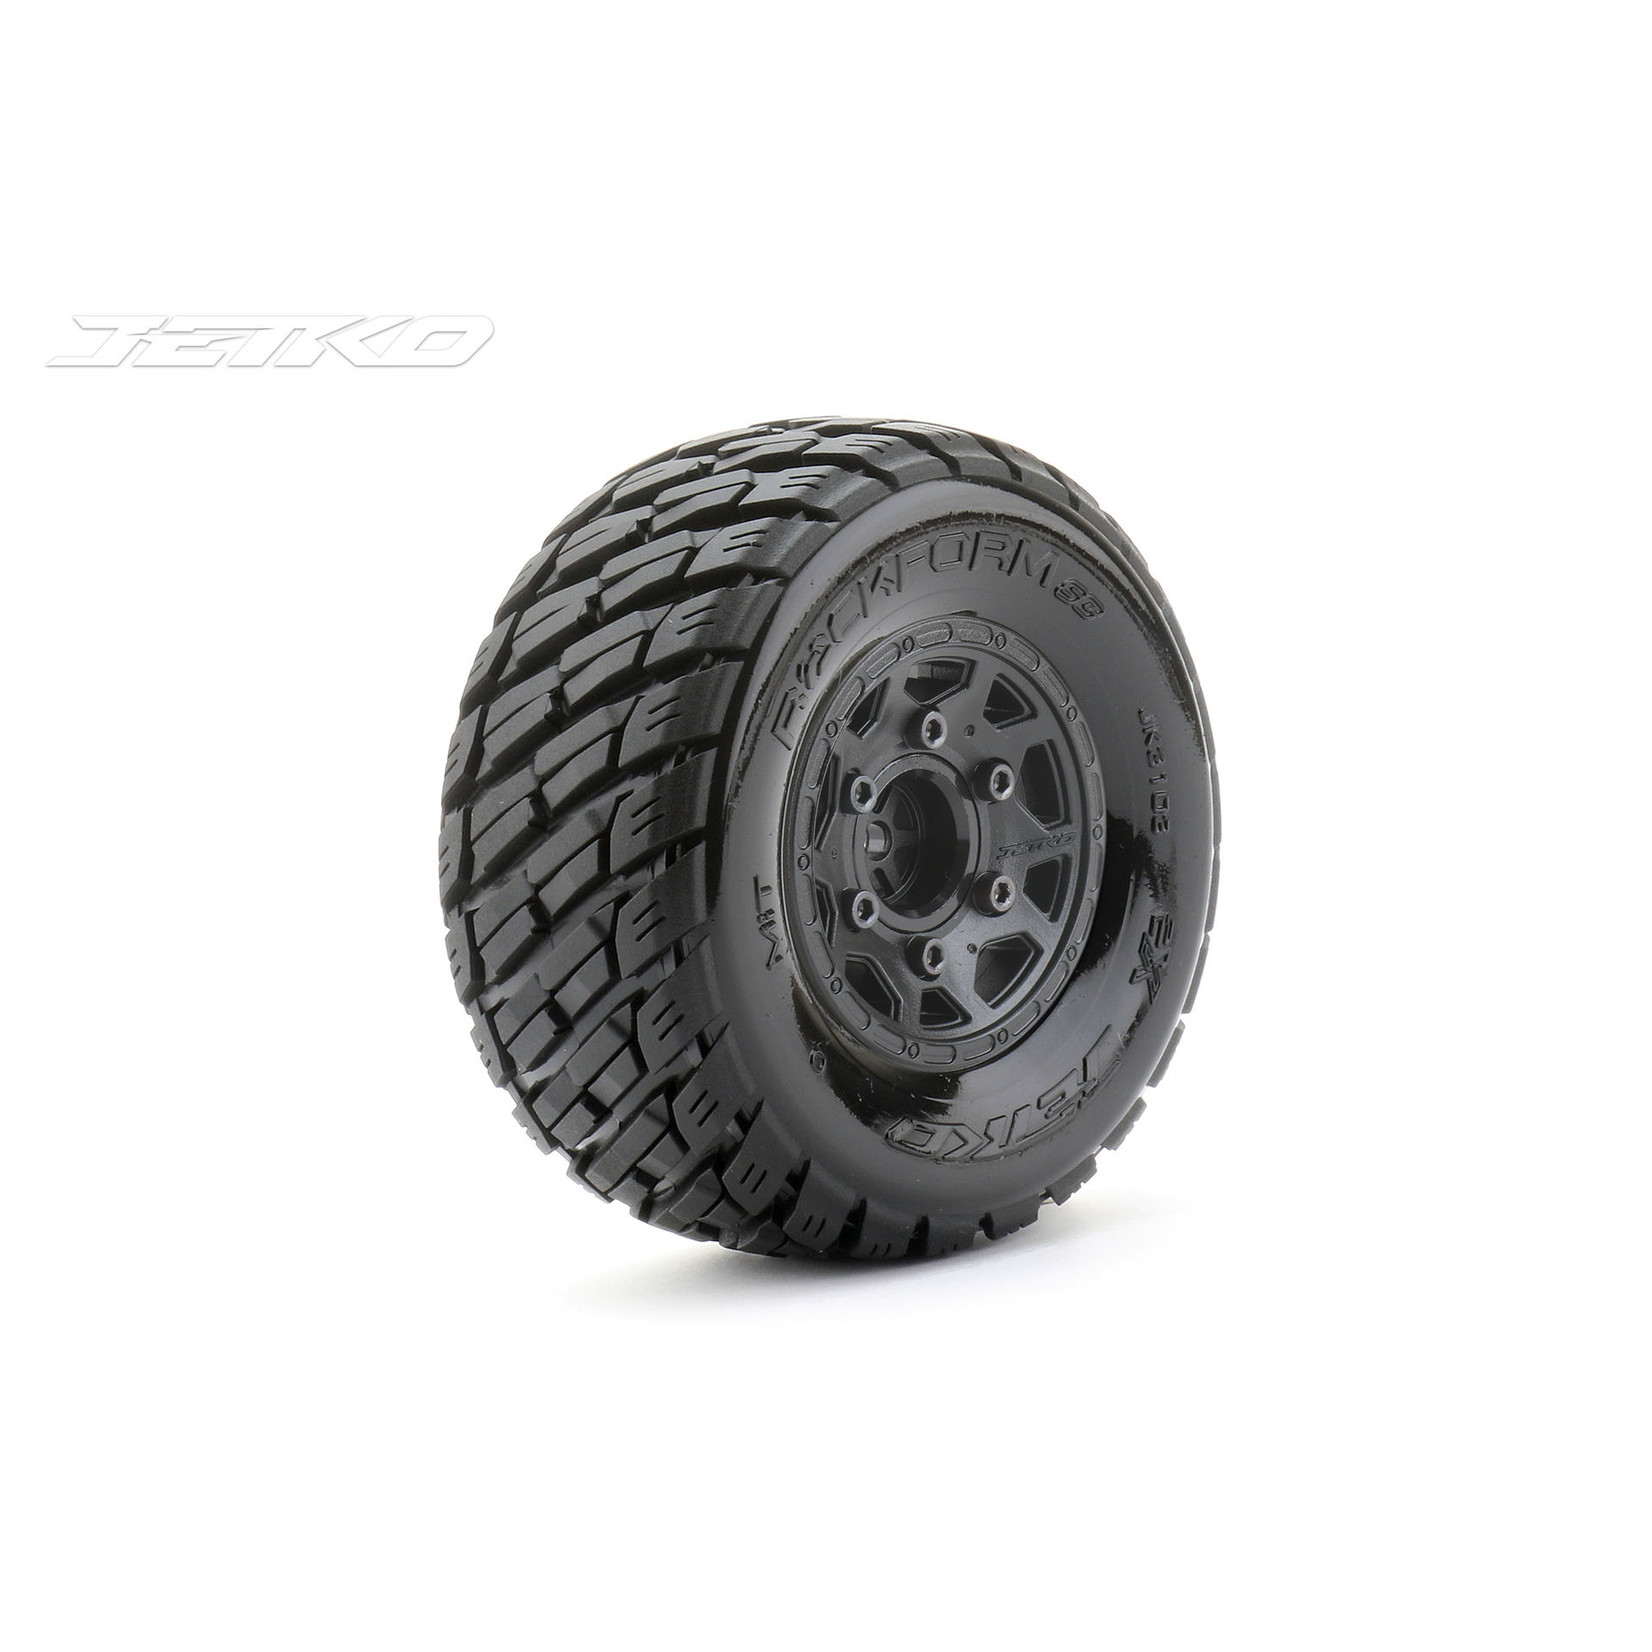 Jetko Tires Jetko Tires 1/10 SC Rockform Tires Mounted on Black Claw Rims, Medium Soft, 12mm Hex, 0" Offset #JKO3103CBMSGNB1